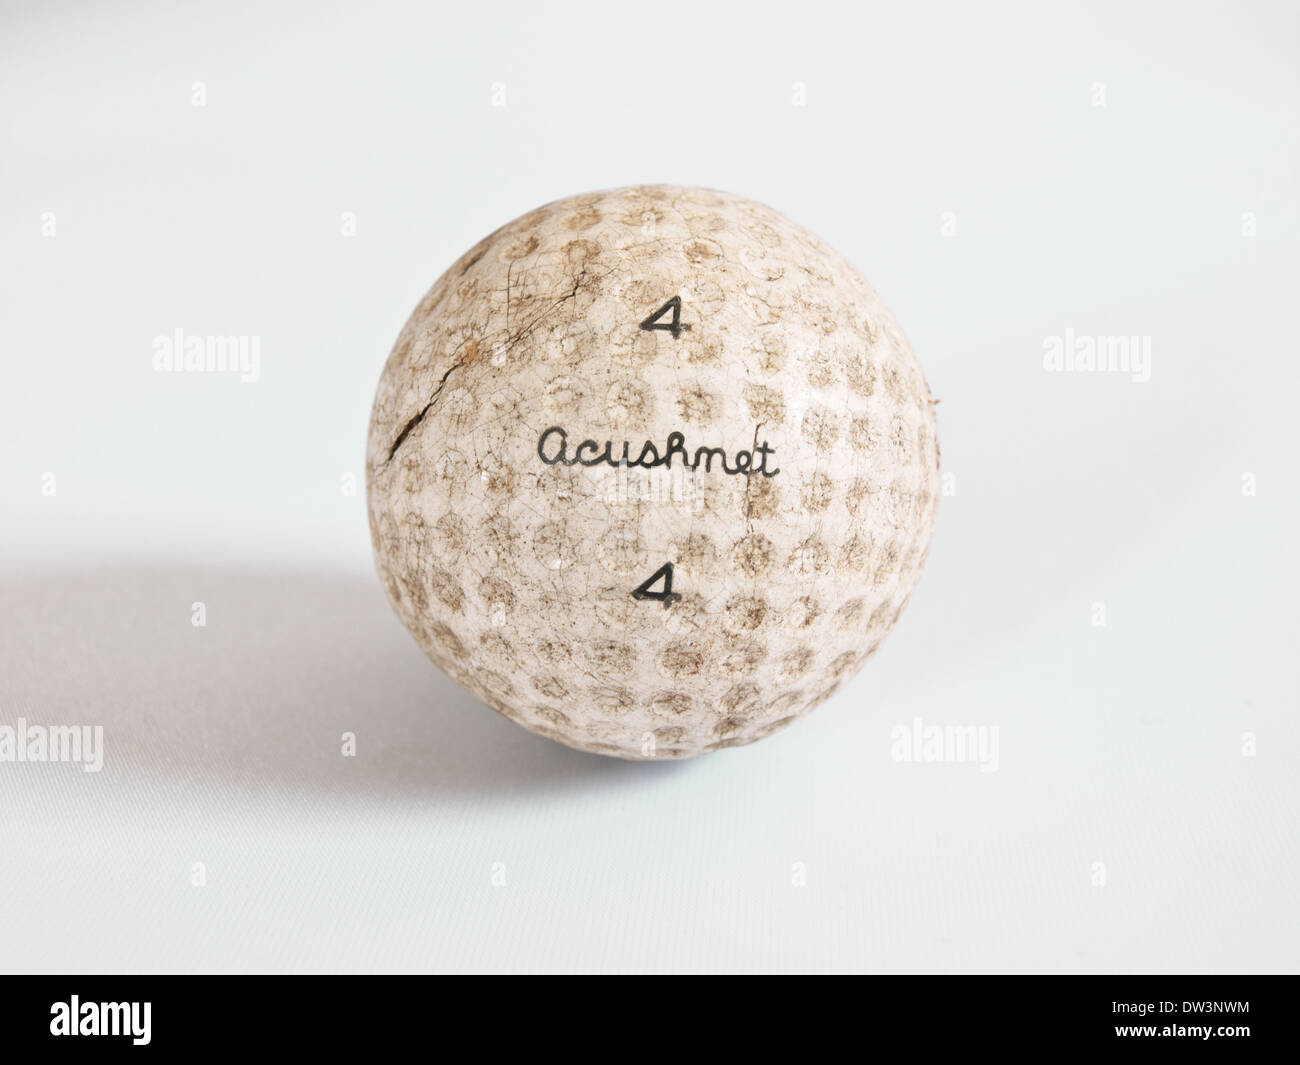 Acushmet golf ball pre 1952 Stock Photo